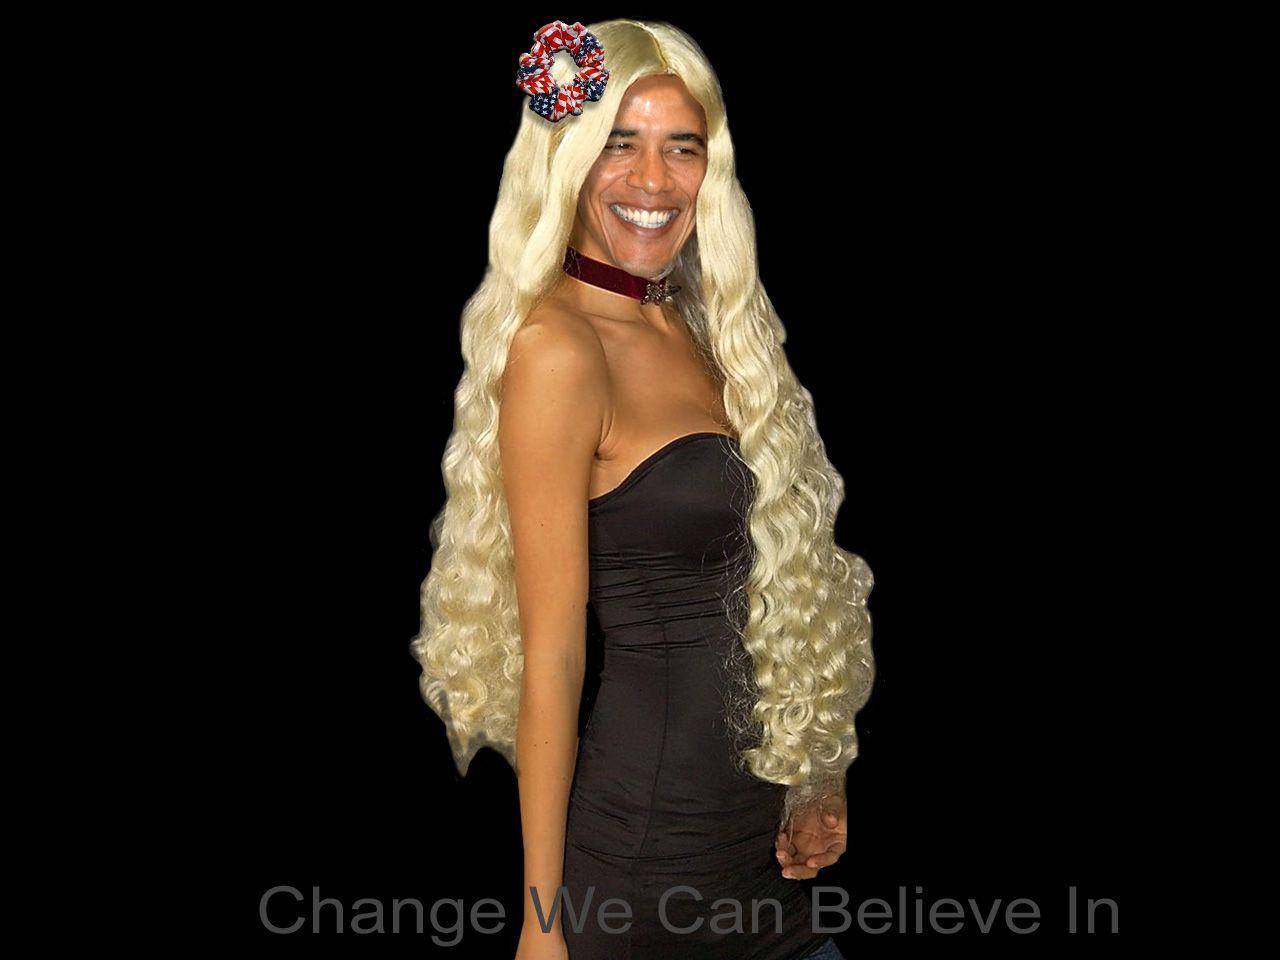 Barak Obama spoof, 1280 x 960pix wallpaper Mixed Style, Photo